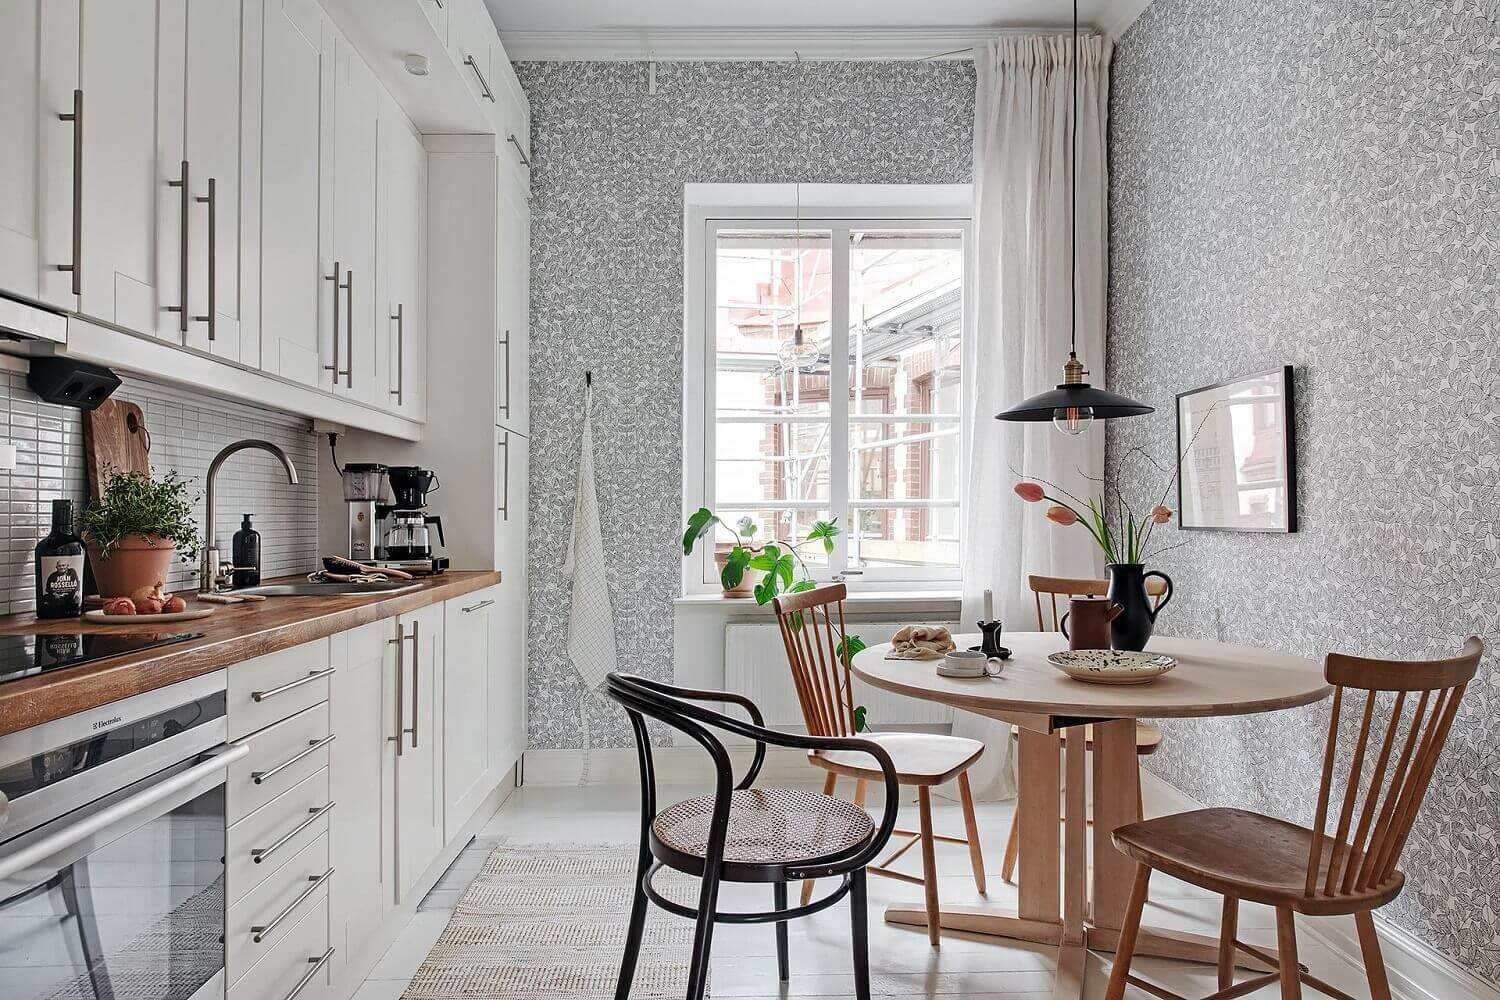 Casa con cocina con mesa de comedor incorporada de estilo nórdico